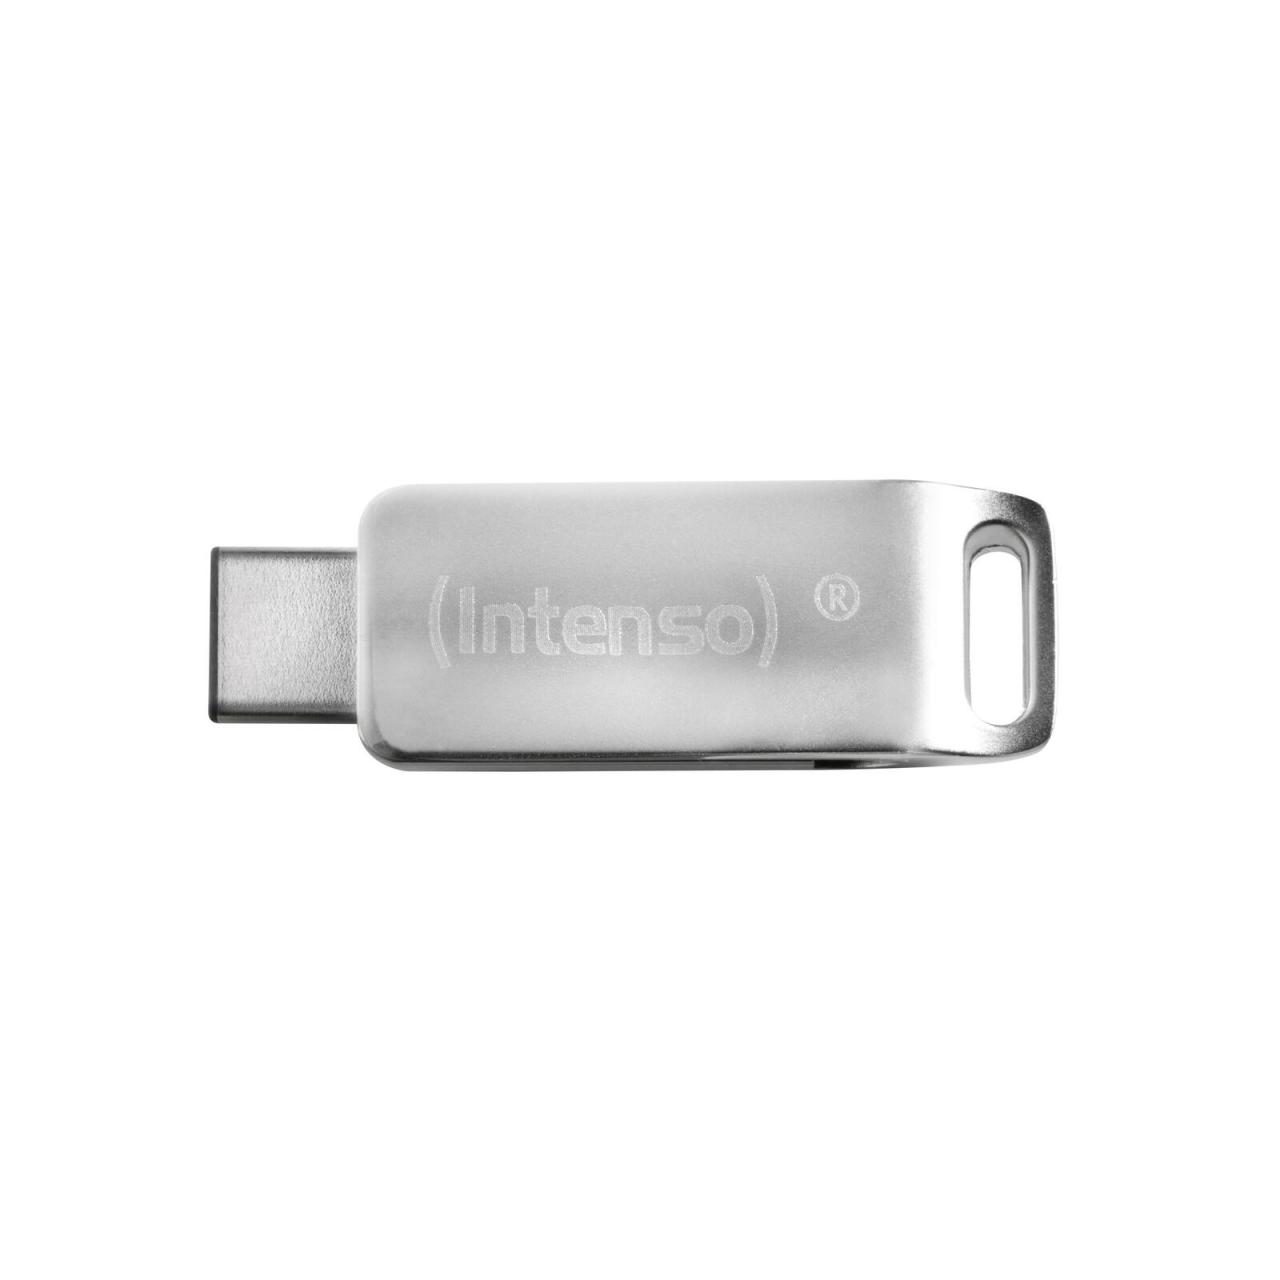 IntensoUSB-St.cMobileLine 64GB USB-Stick von Intenso